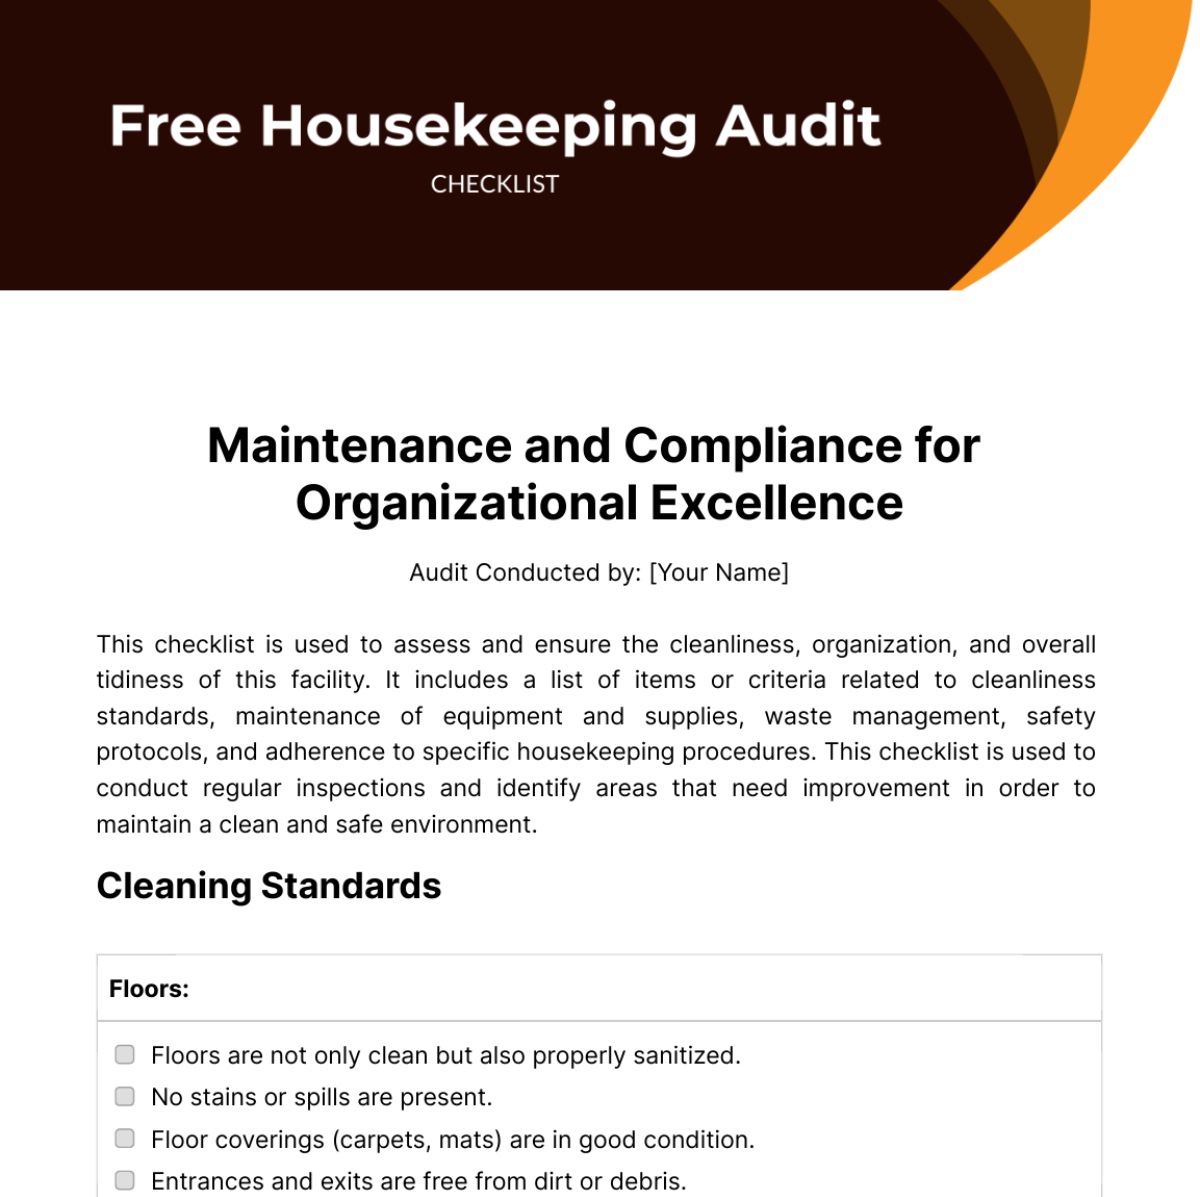 Free Housekeeping Audit Checklist Template